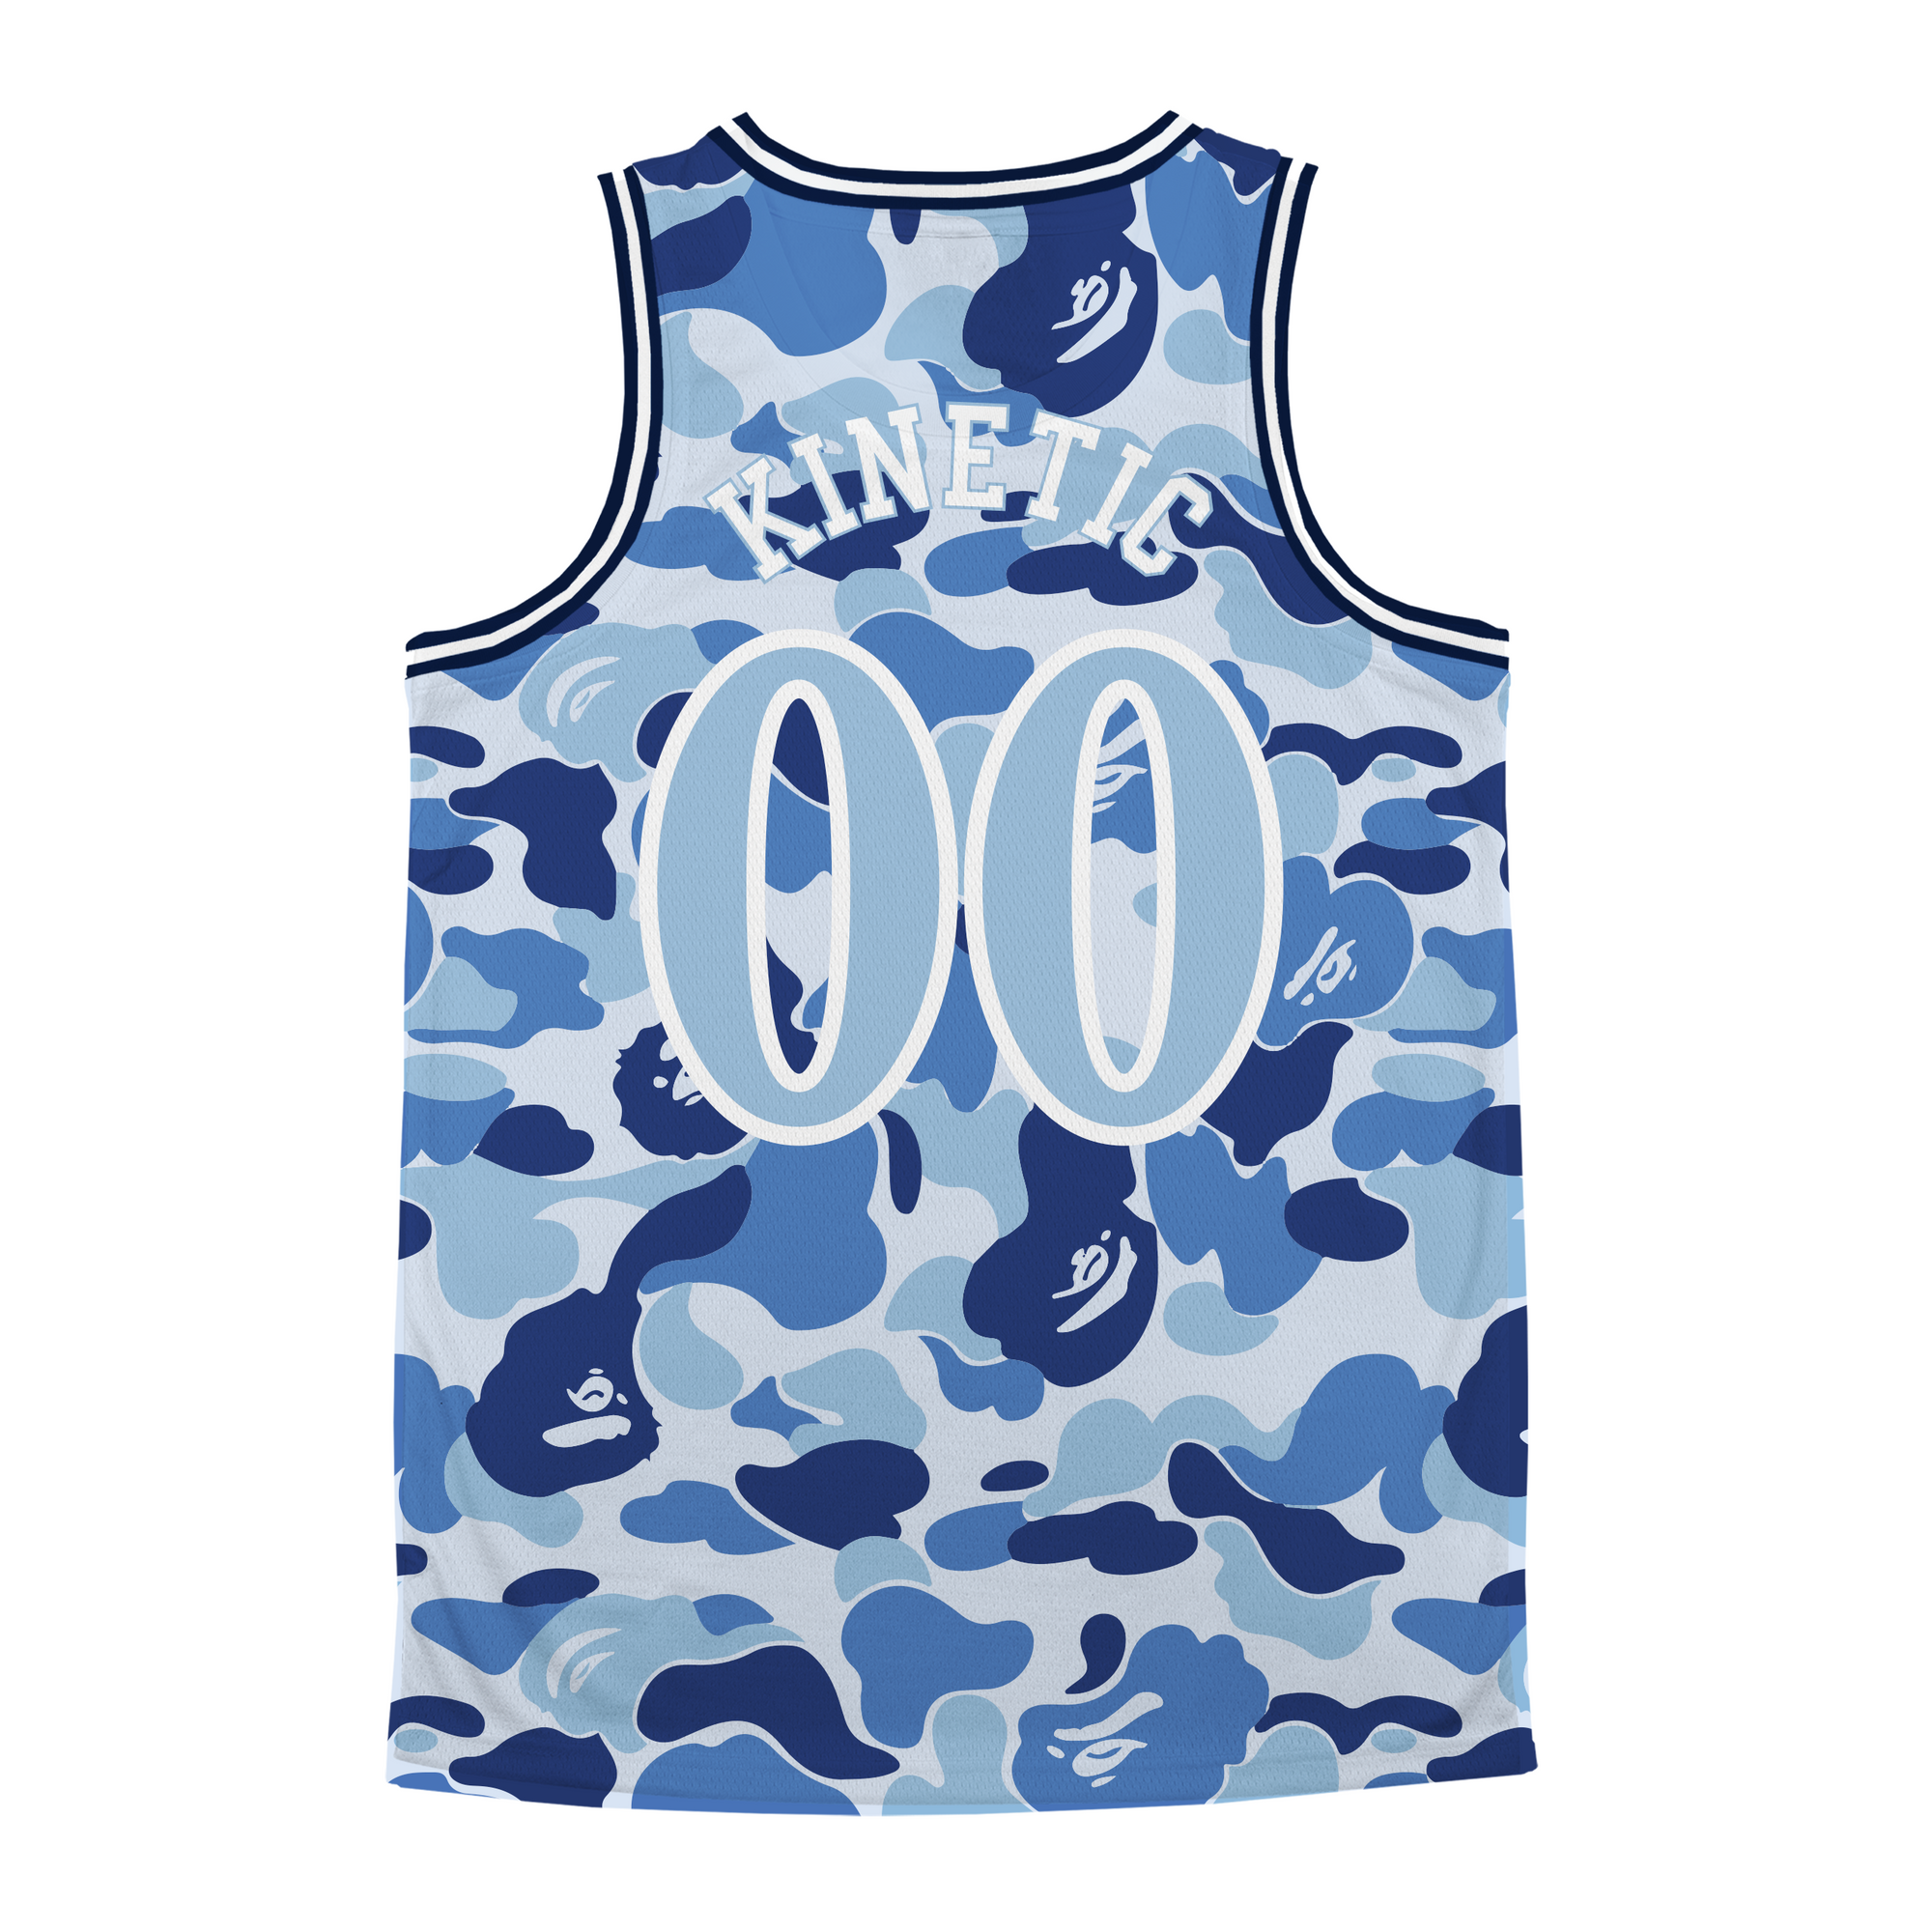 Kappa Delta Rho - Blue Camo Basketball Jersey